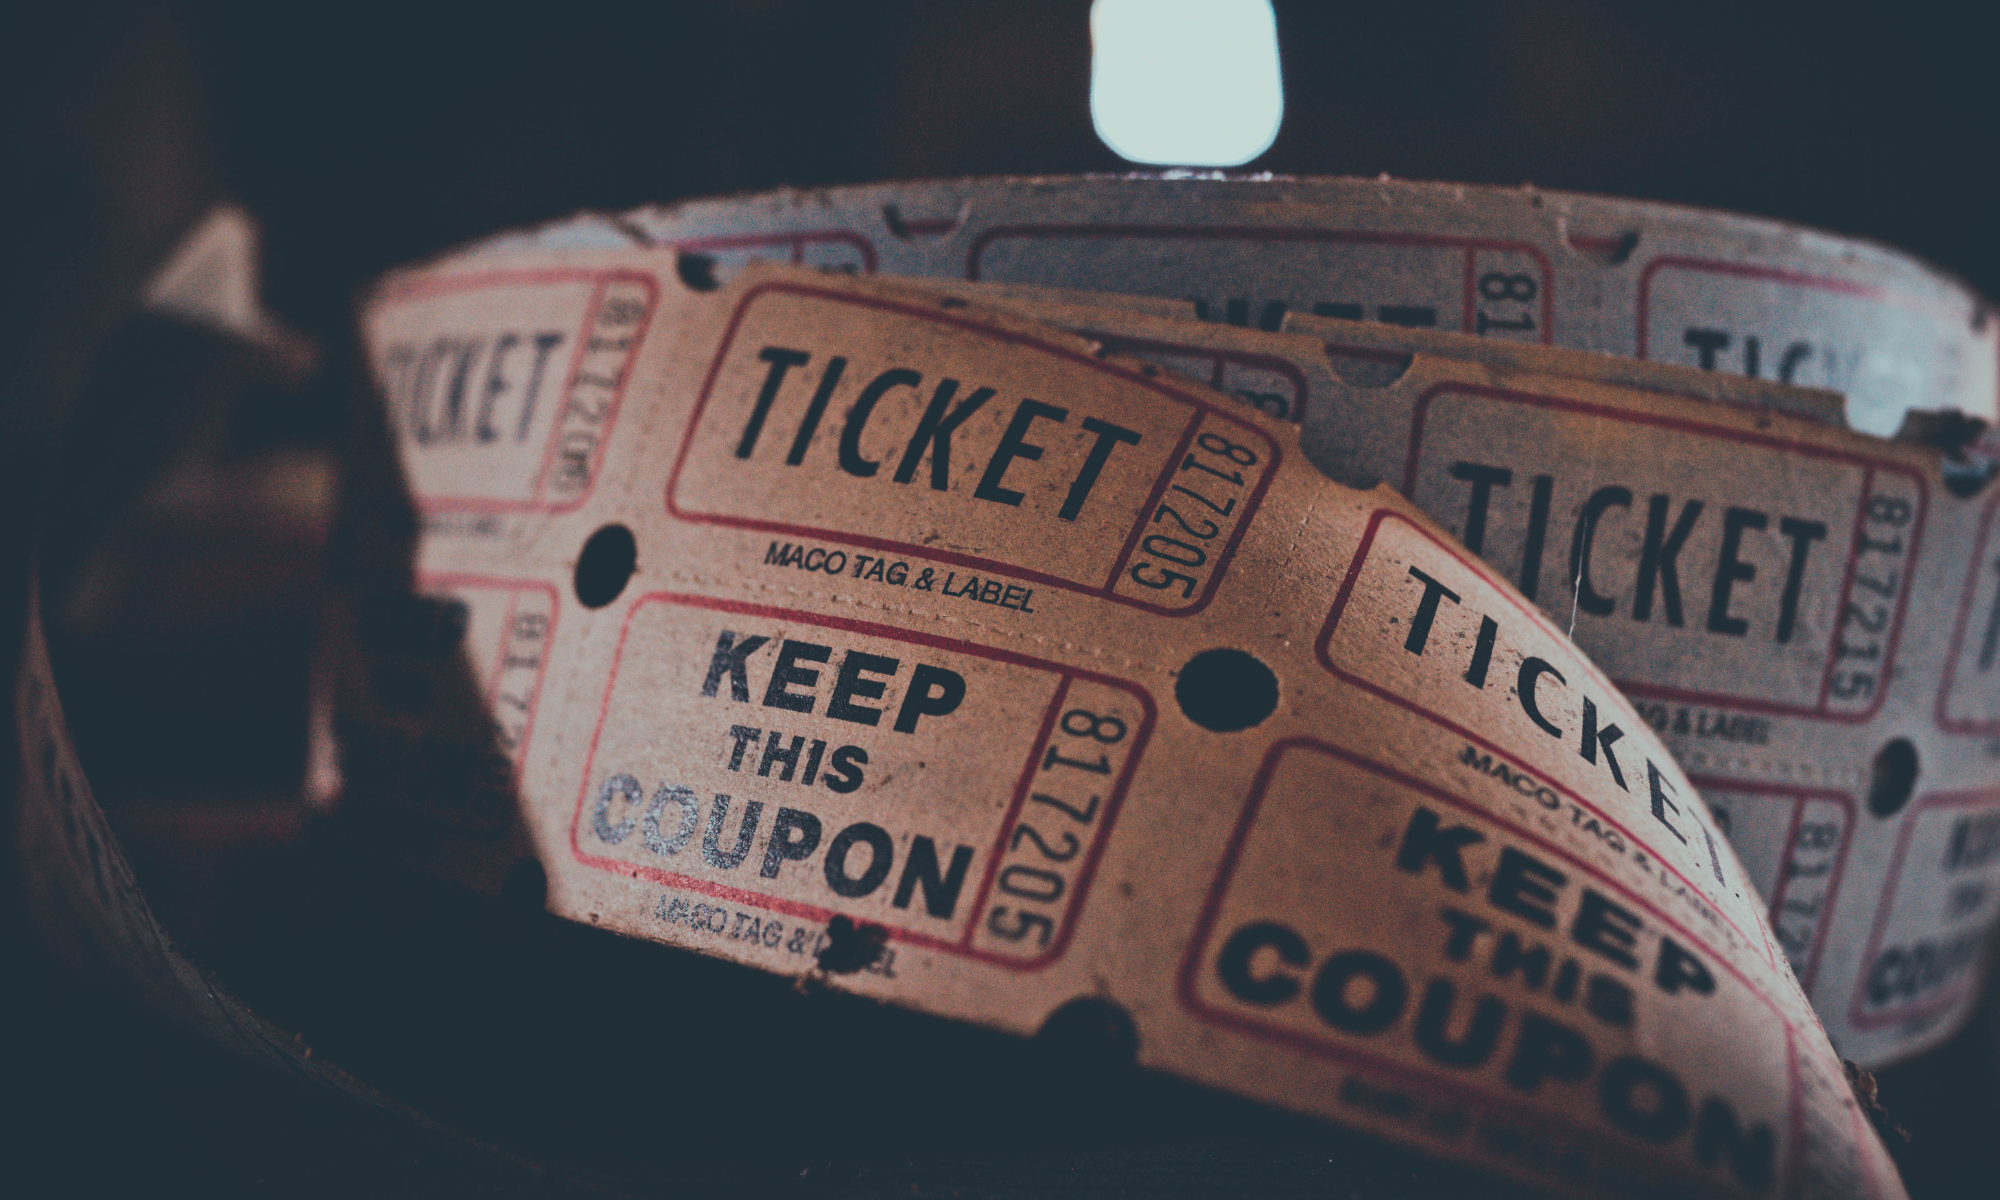 Old cinema tickets